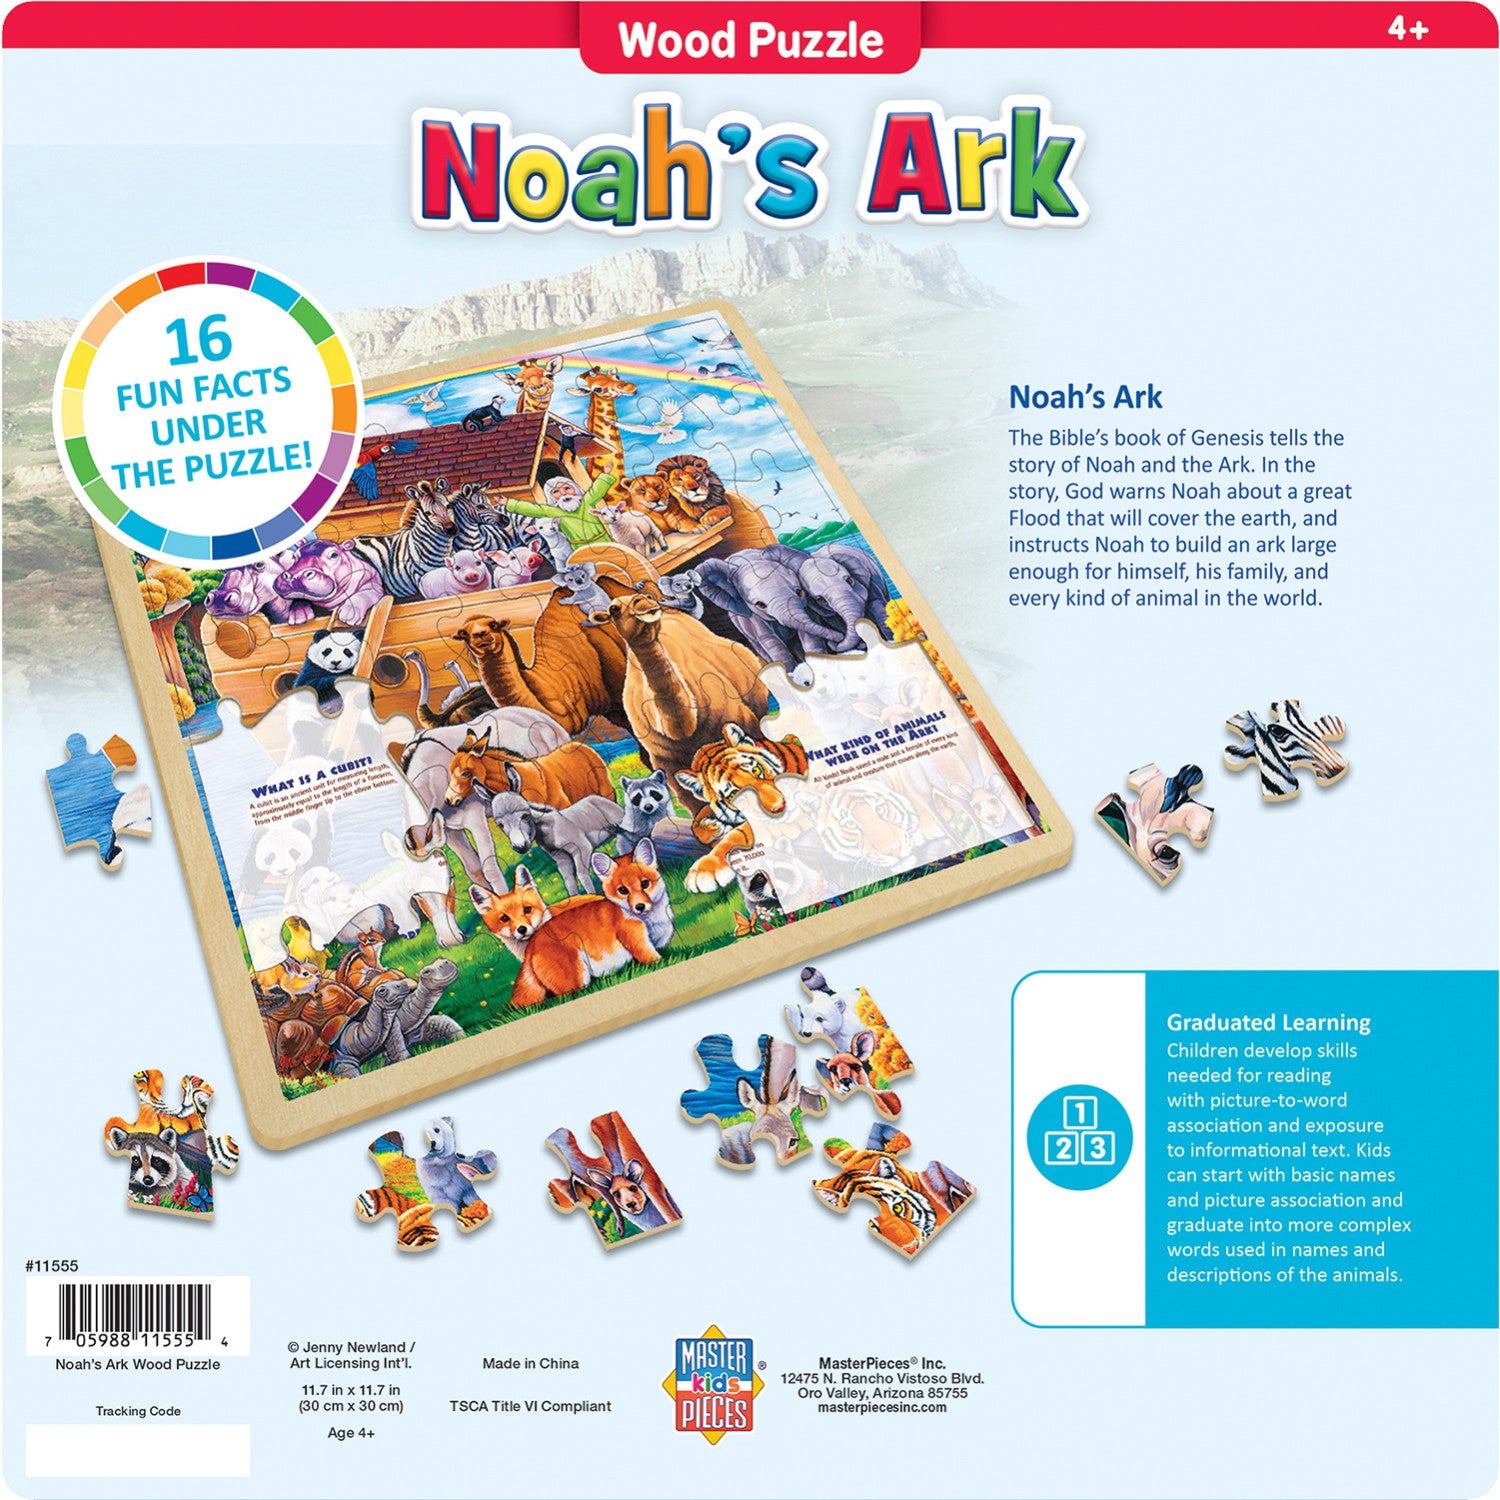 Wood Fun Facts - Noah's Ark 48 Piece Wood Jigsaw Puzzle